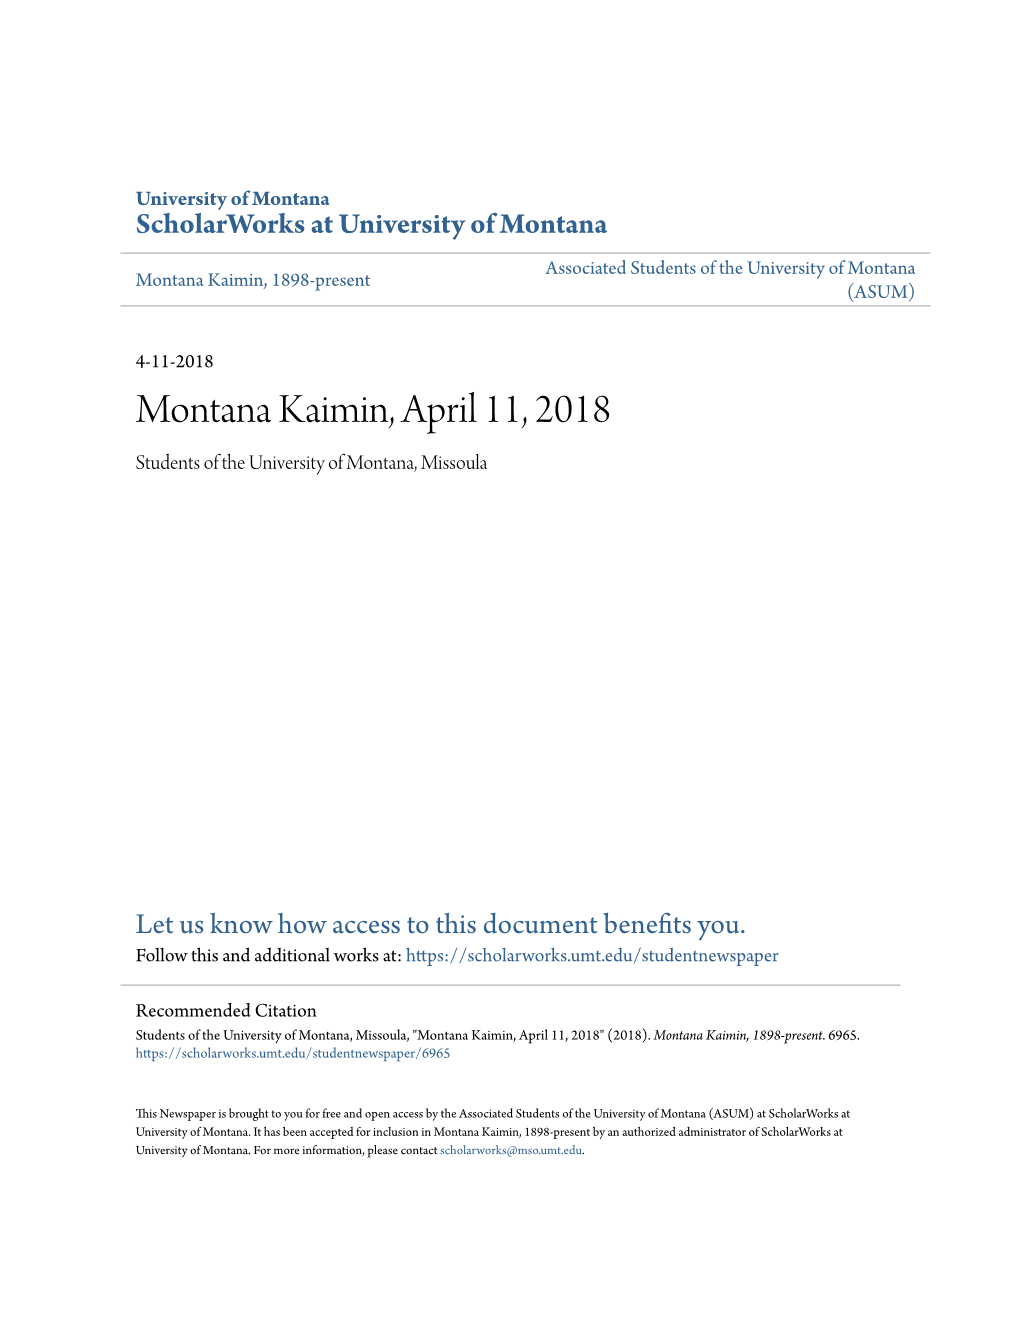 Montana Kaimin, April 11, 2018 Students of the University of Montana, Missoula